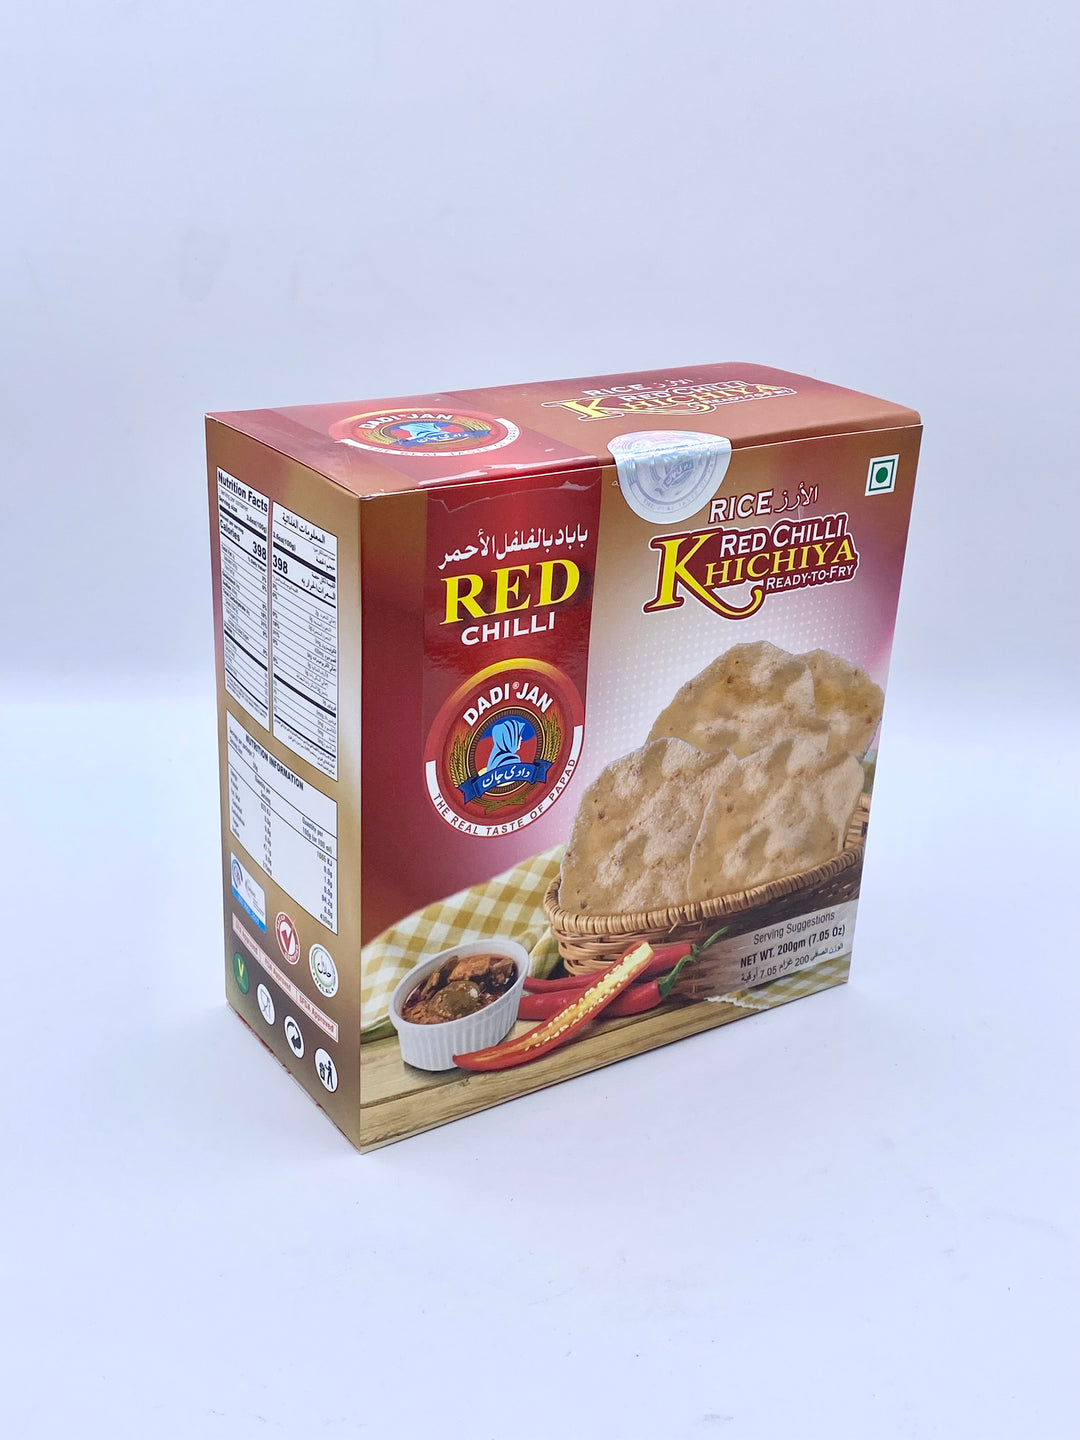 Dadijan Khichiya Red Chilli Papad 200g